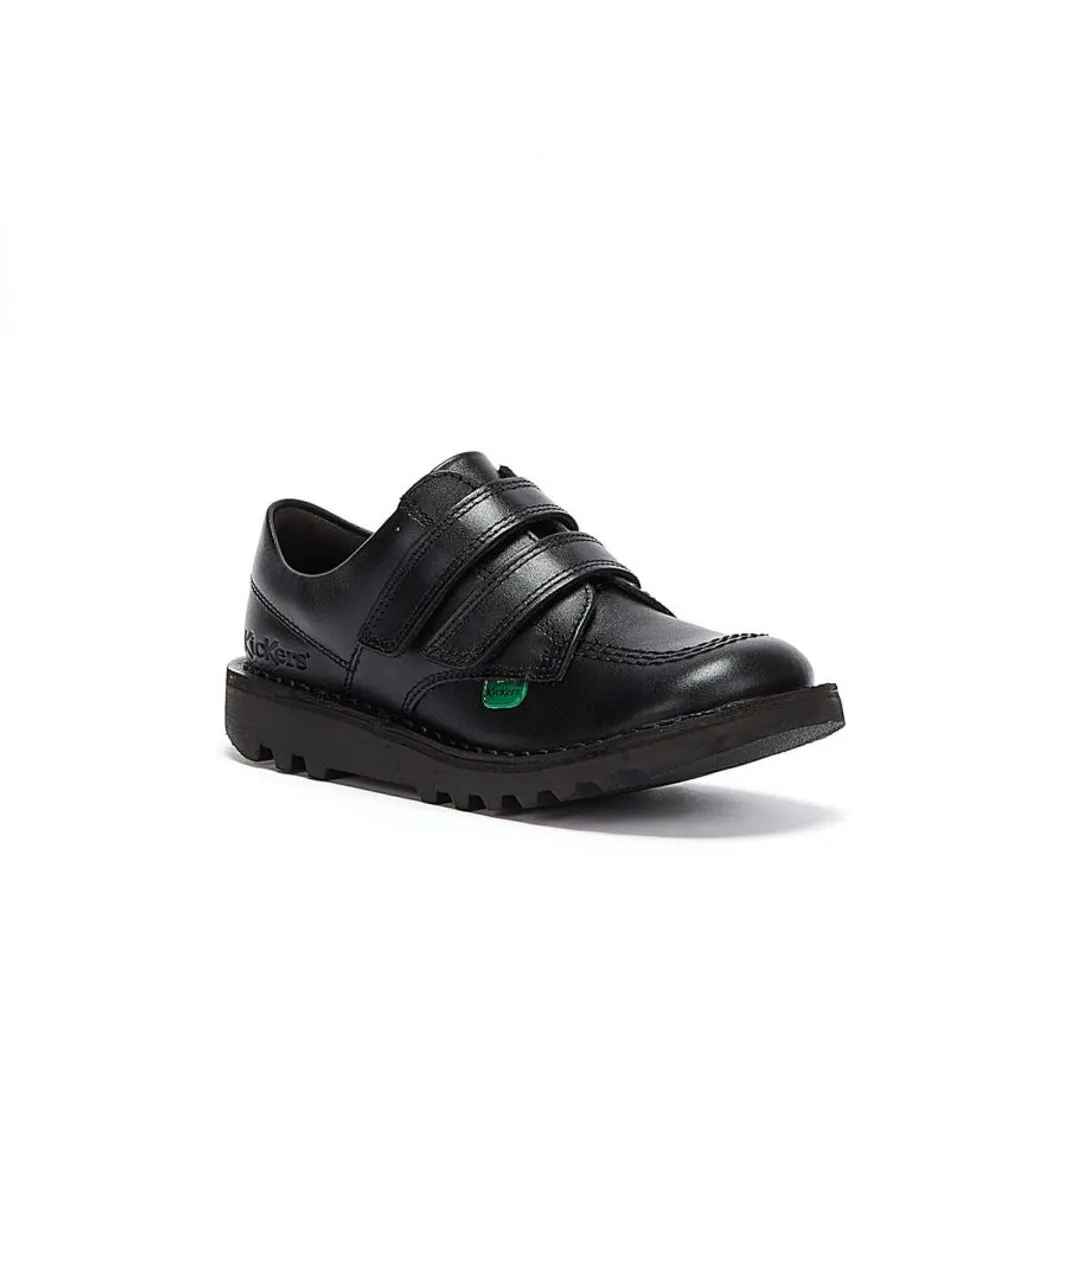 Kickers Baby Unisex Girls Toddlers Kick Lo Hook & Loop Closure Leather Shoes - (Black) Rubber